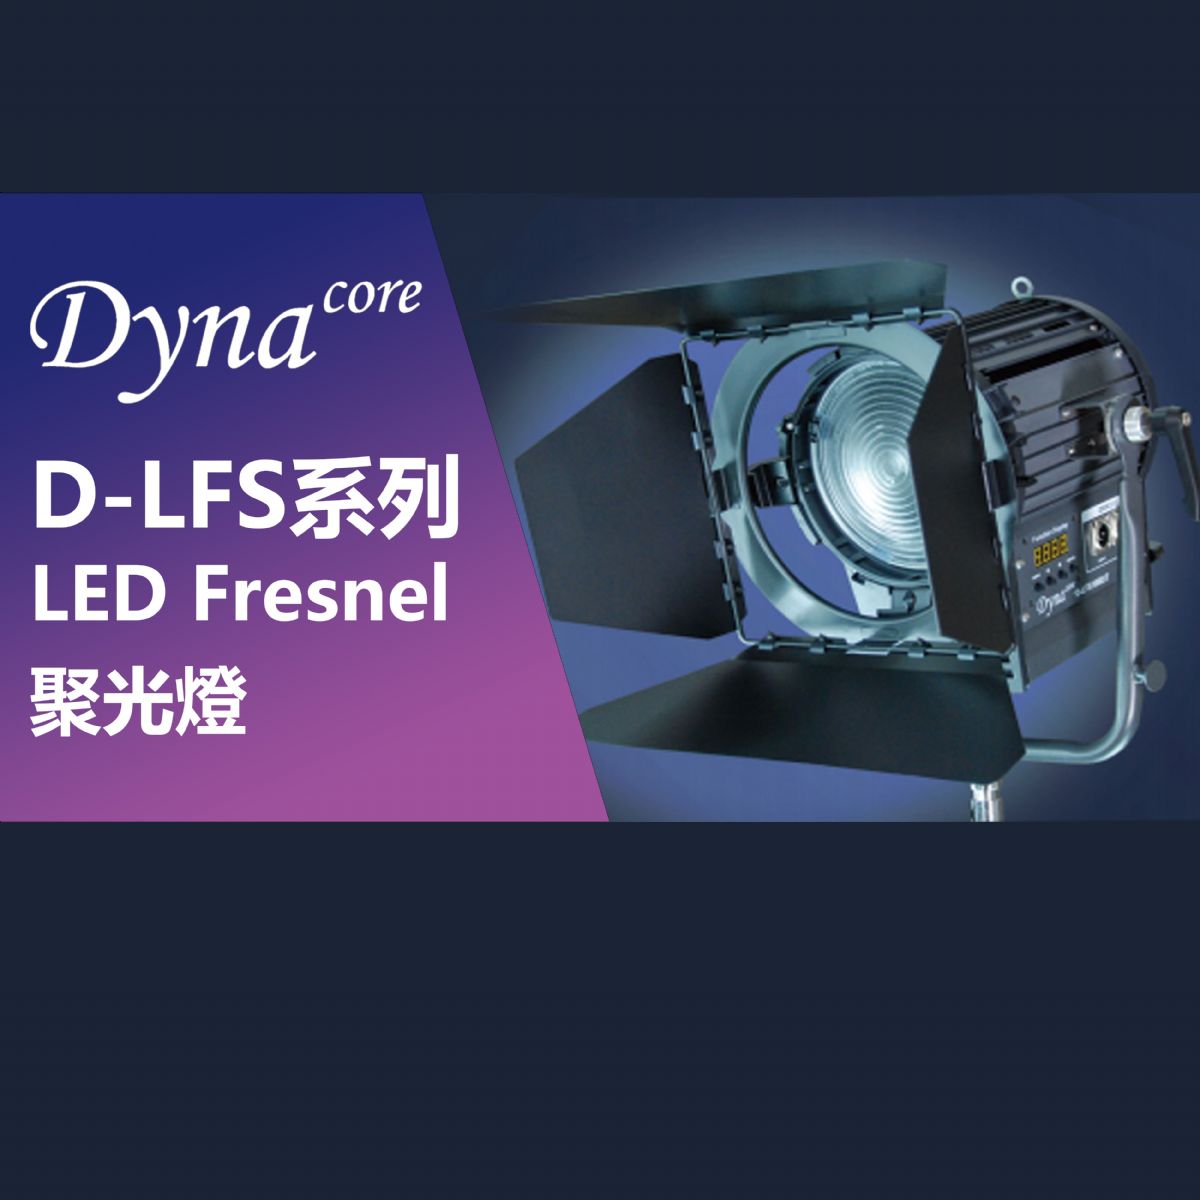 Dynacore LED Fresnel 聚光燈